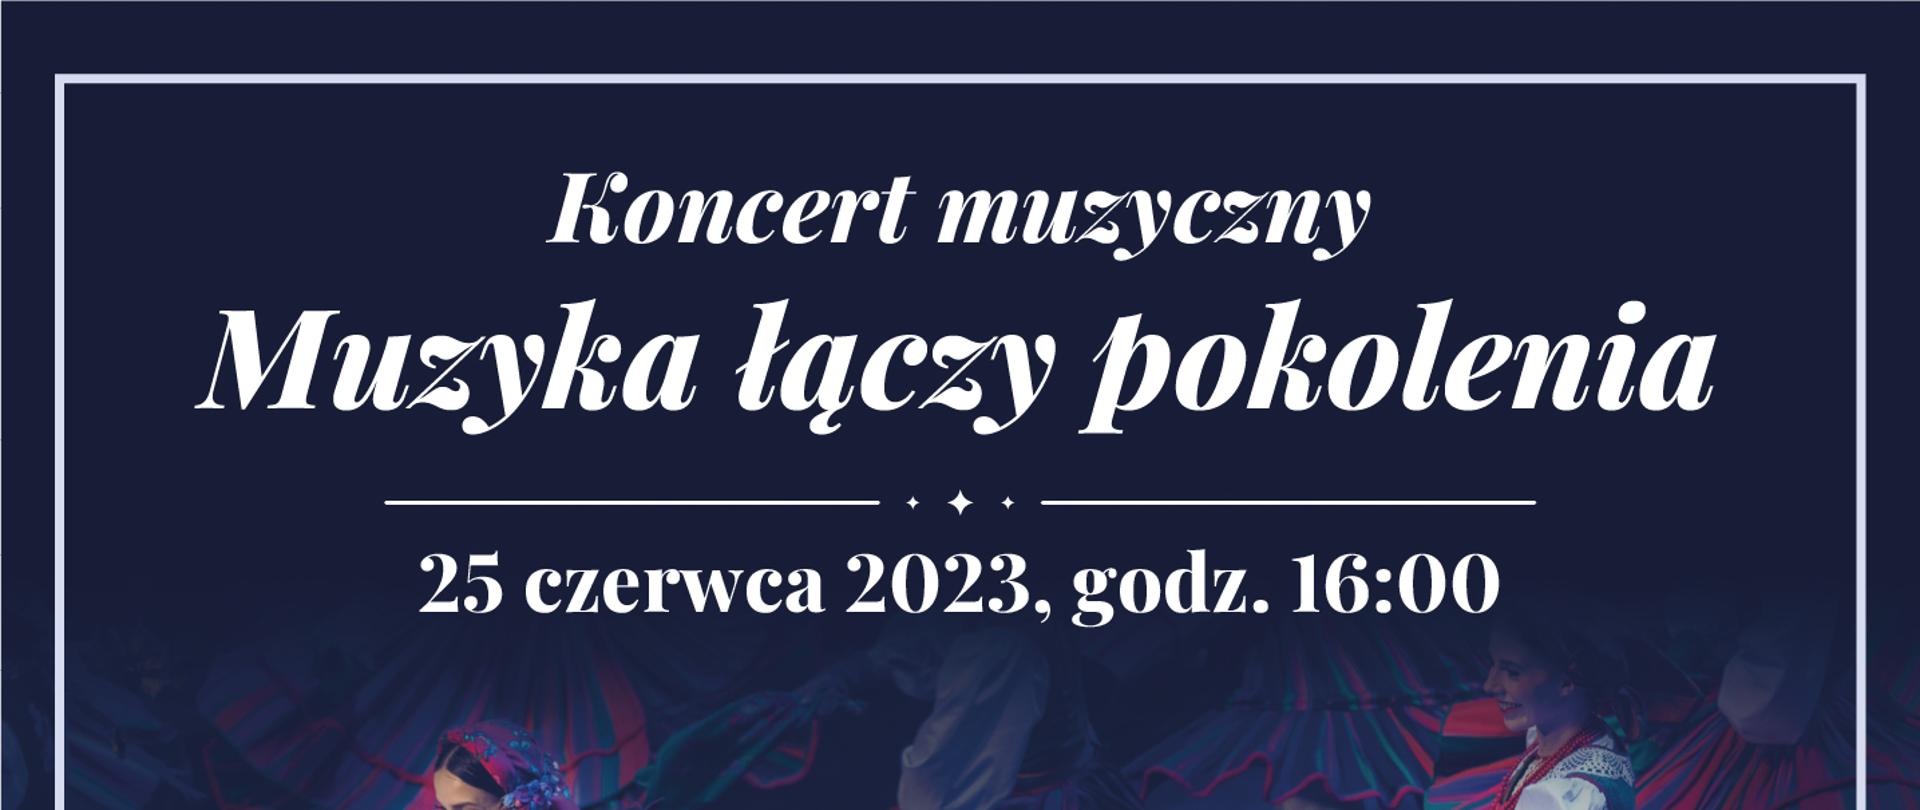 Plakat koncert zespołu Mazowsze